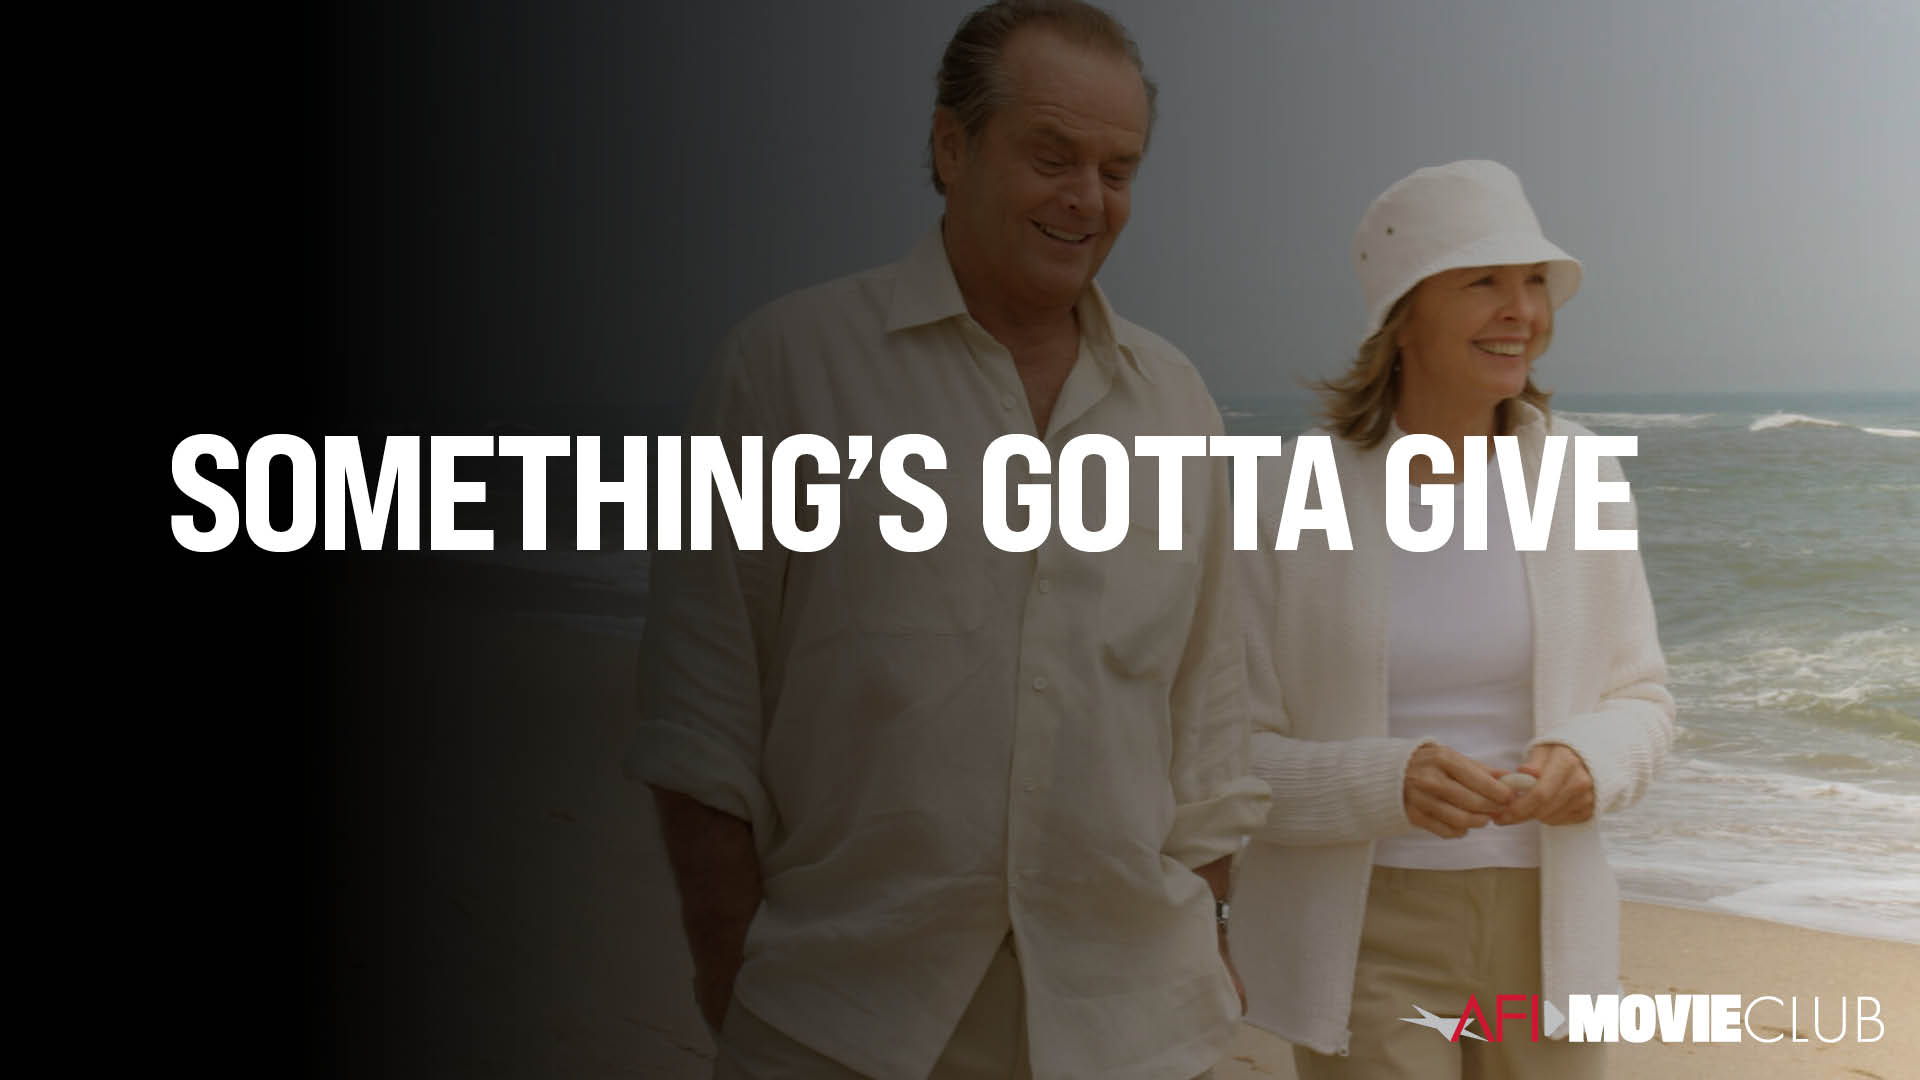 Something's Gotta Give Film Still - Jack Nicholson and Diane Keaton